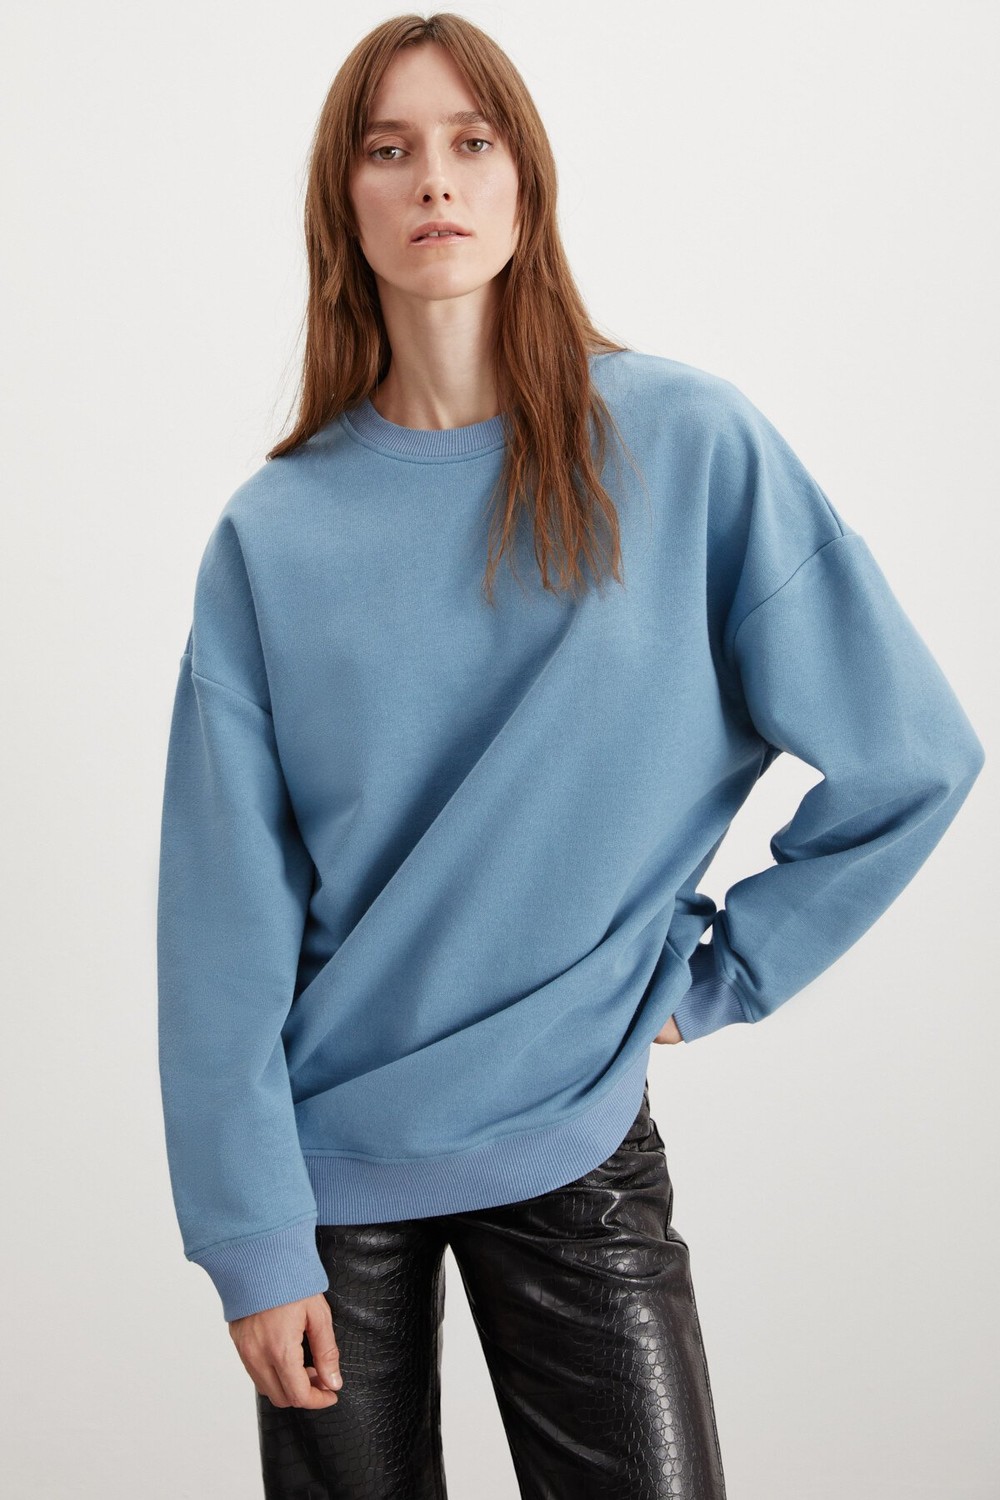 GRIMELANGE ALLYS Oversize Blue Single Sweatshirt